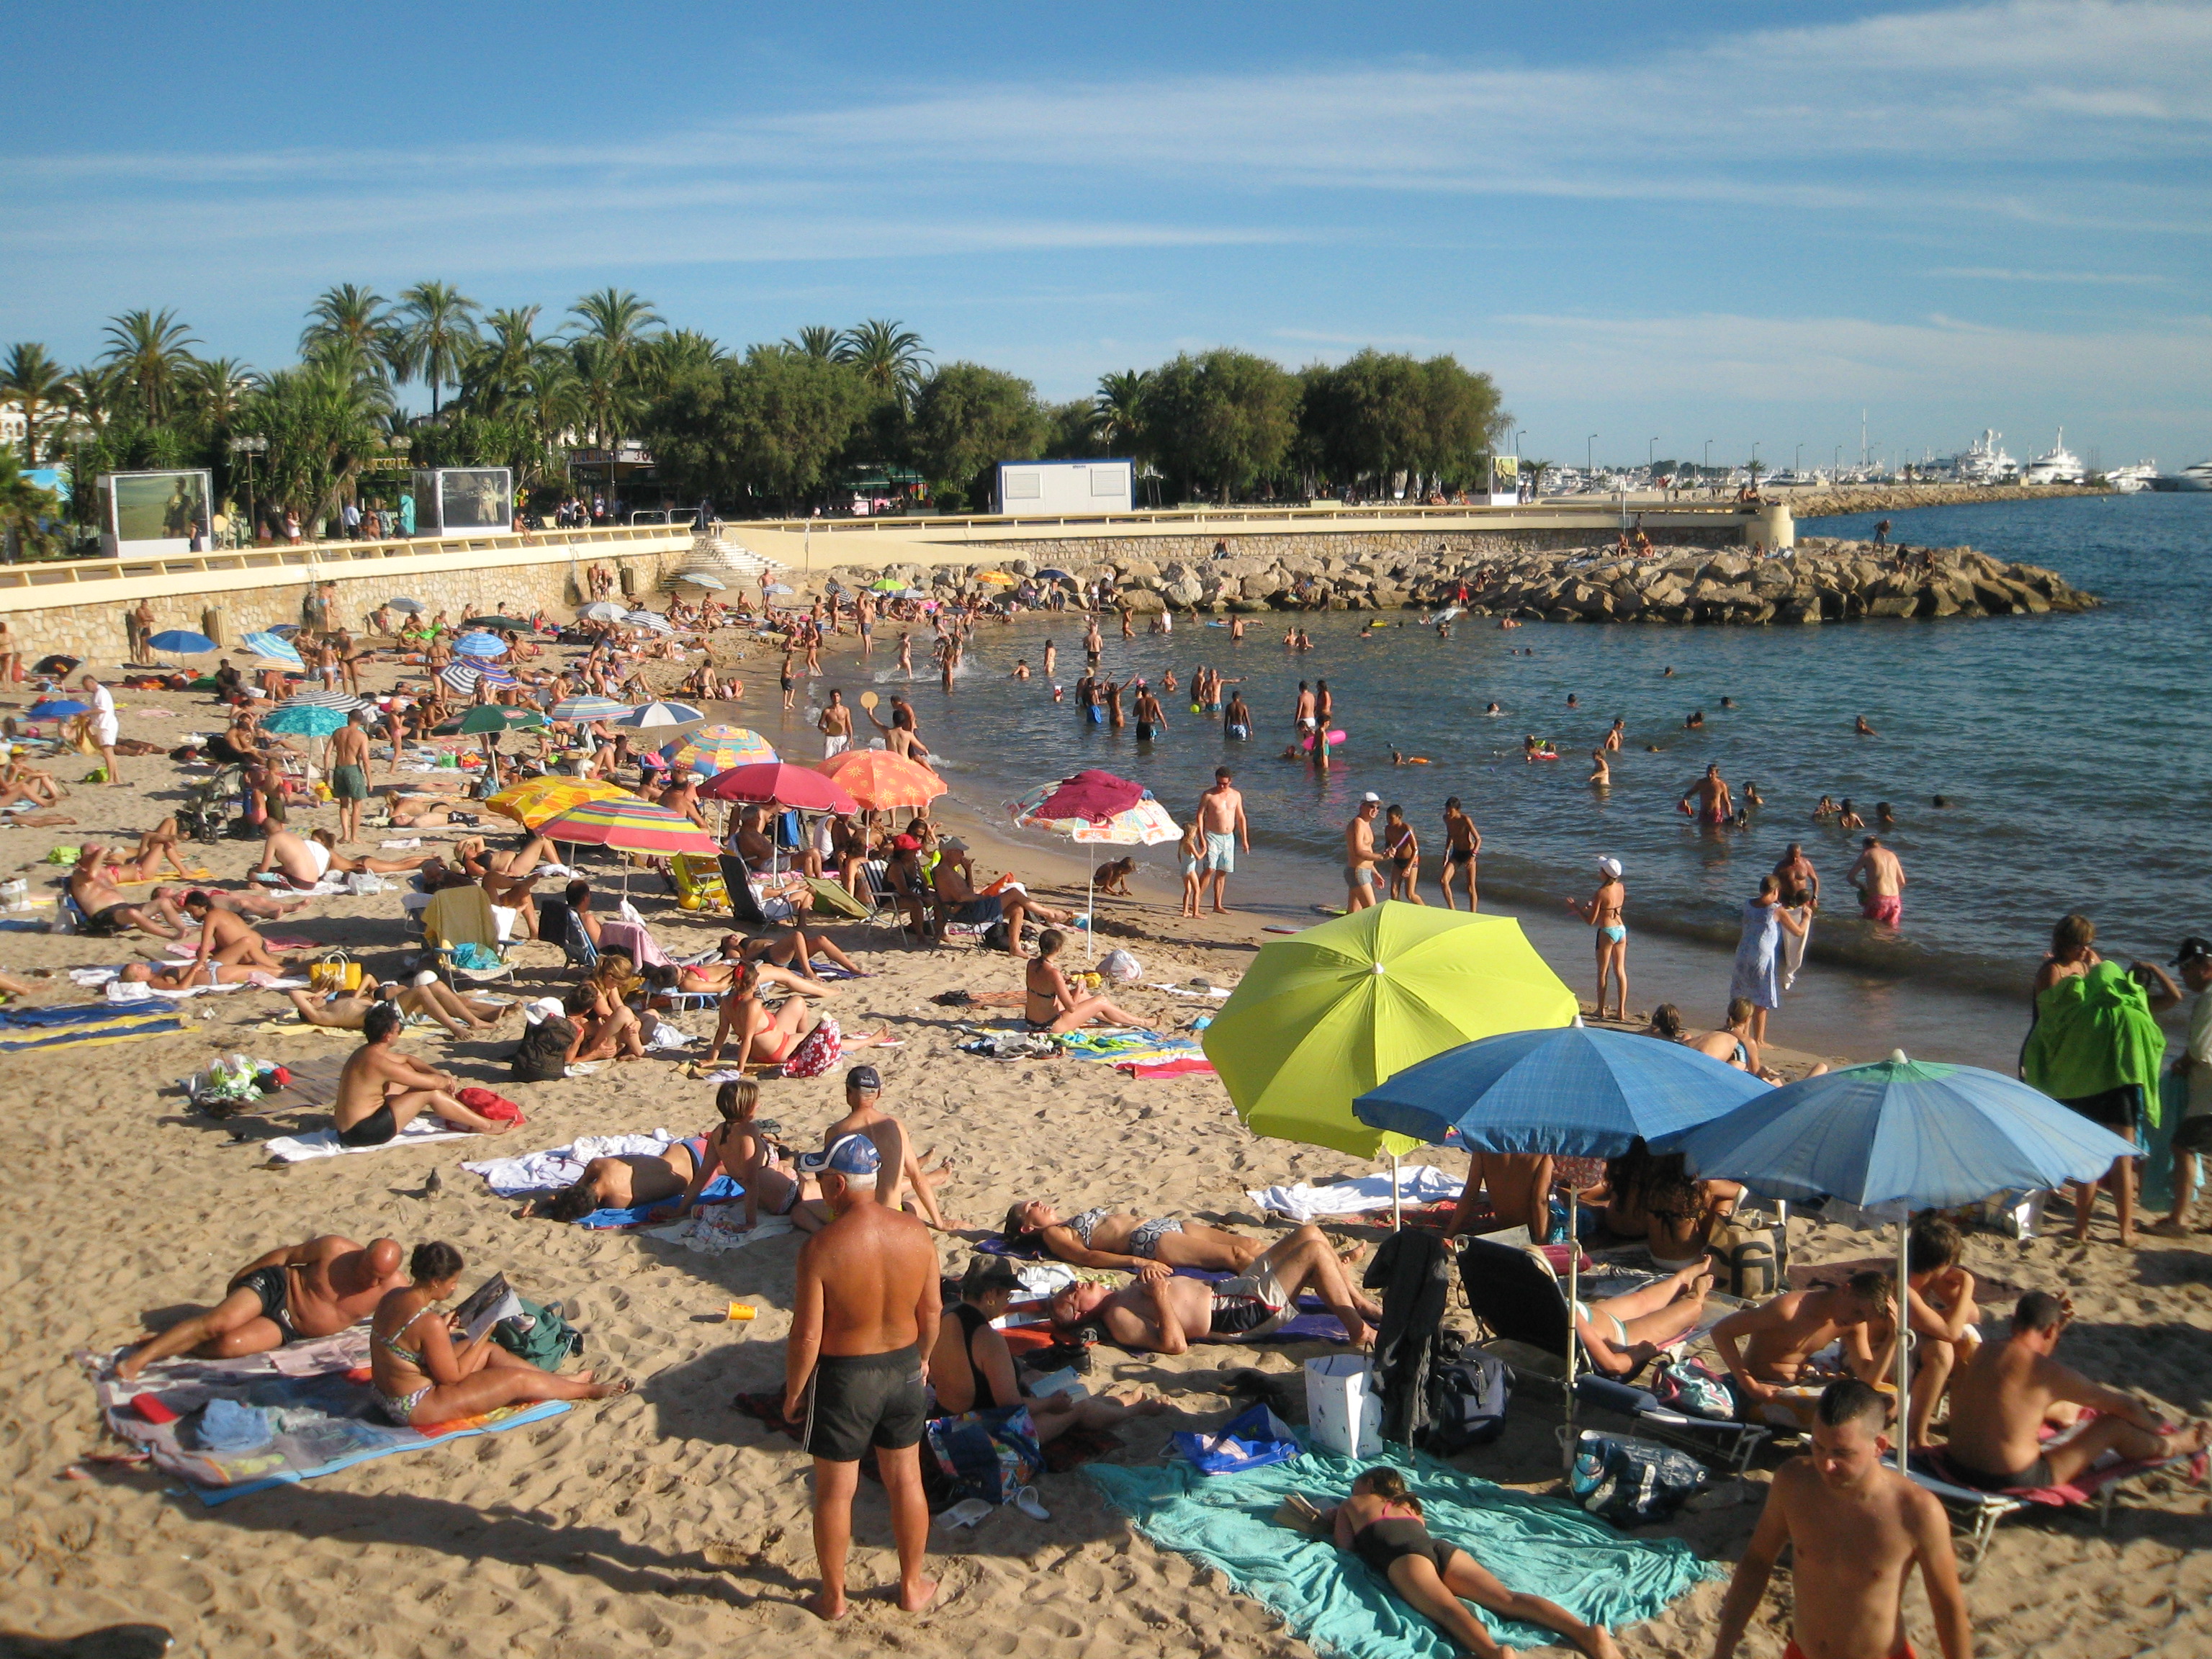 Cannes public beach 7pm